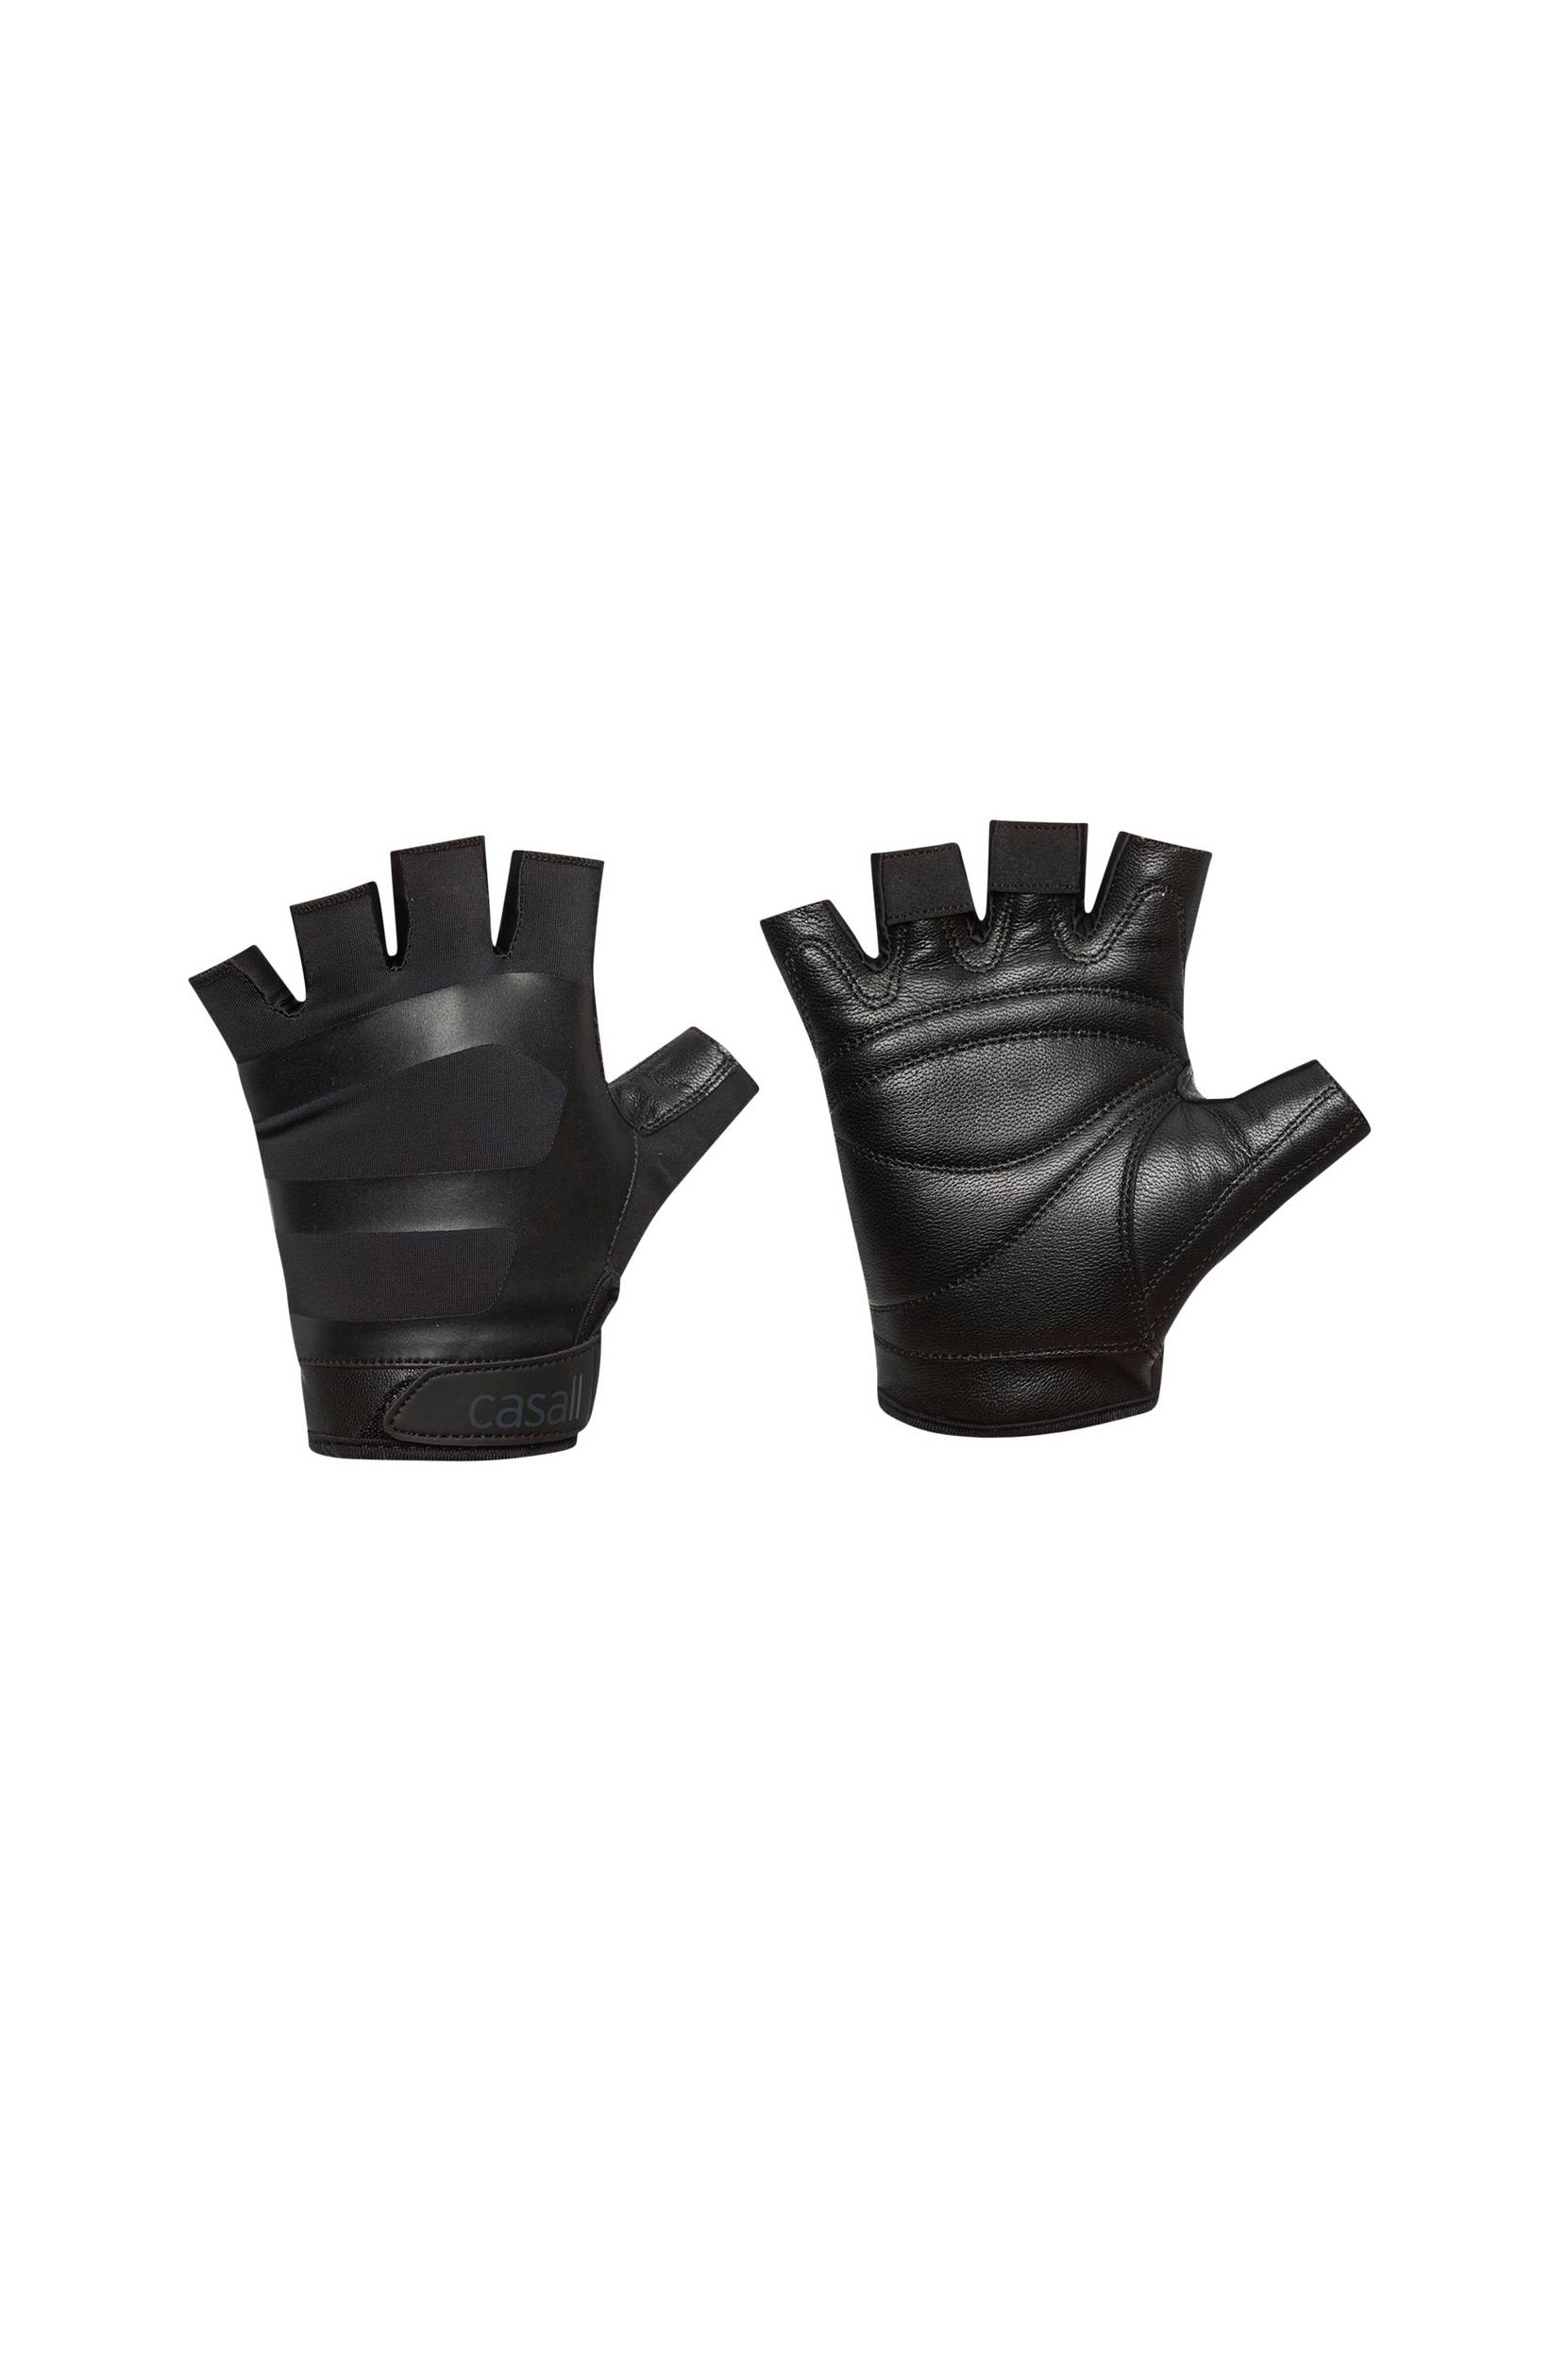 Exercise glove multi XS Black, Casall